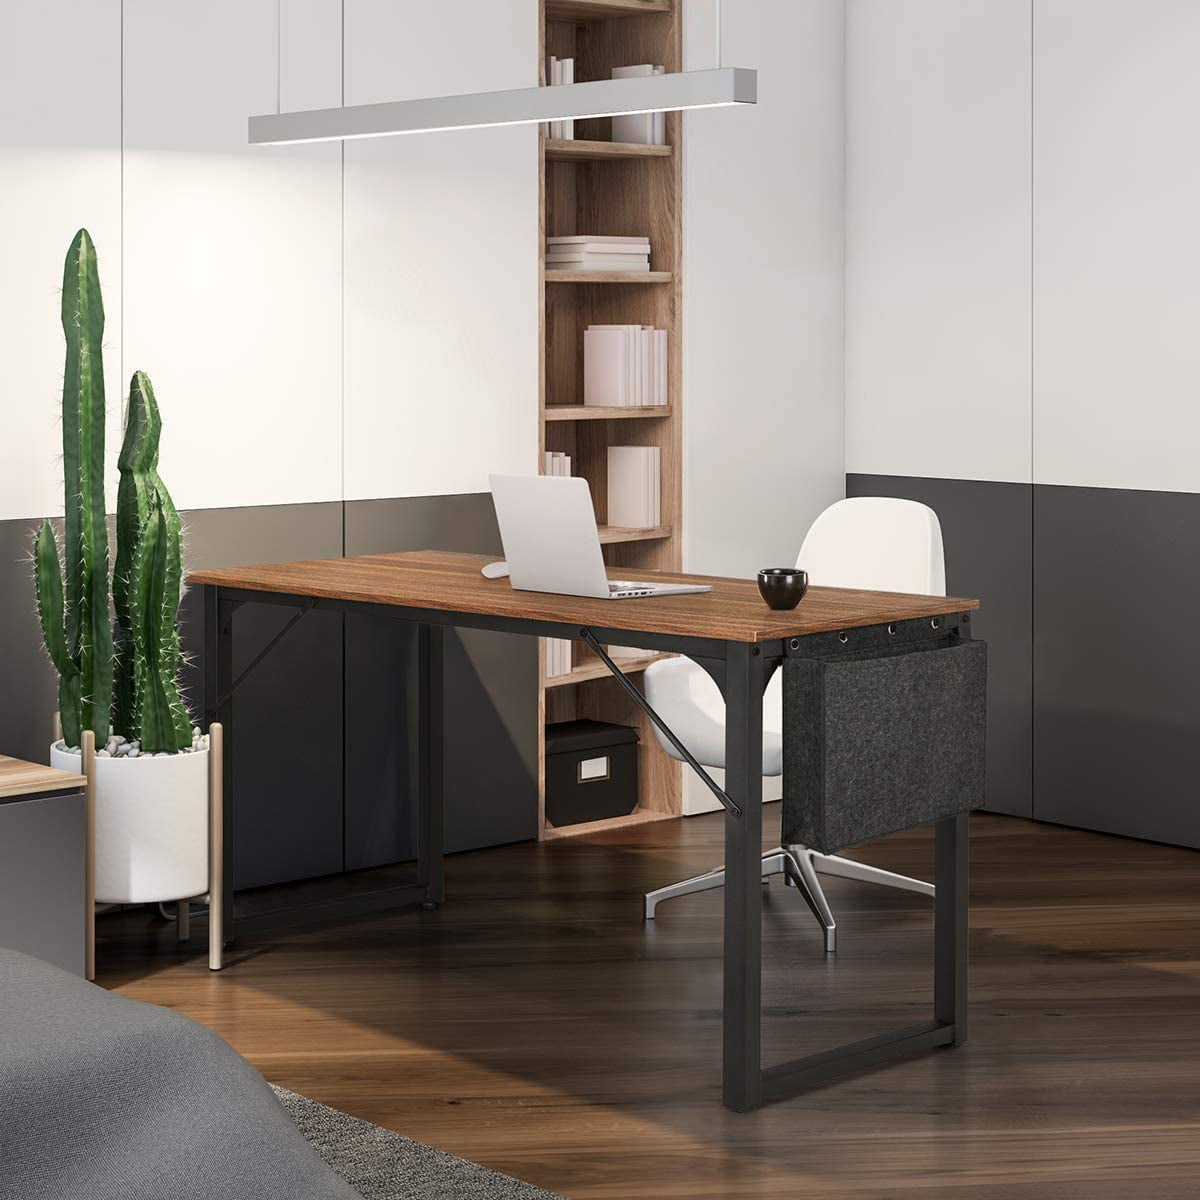 Details about   Modern Simple Design Home Office Desk 47" L Computer Table Desktop Study Writing 